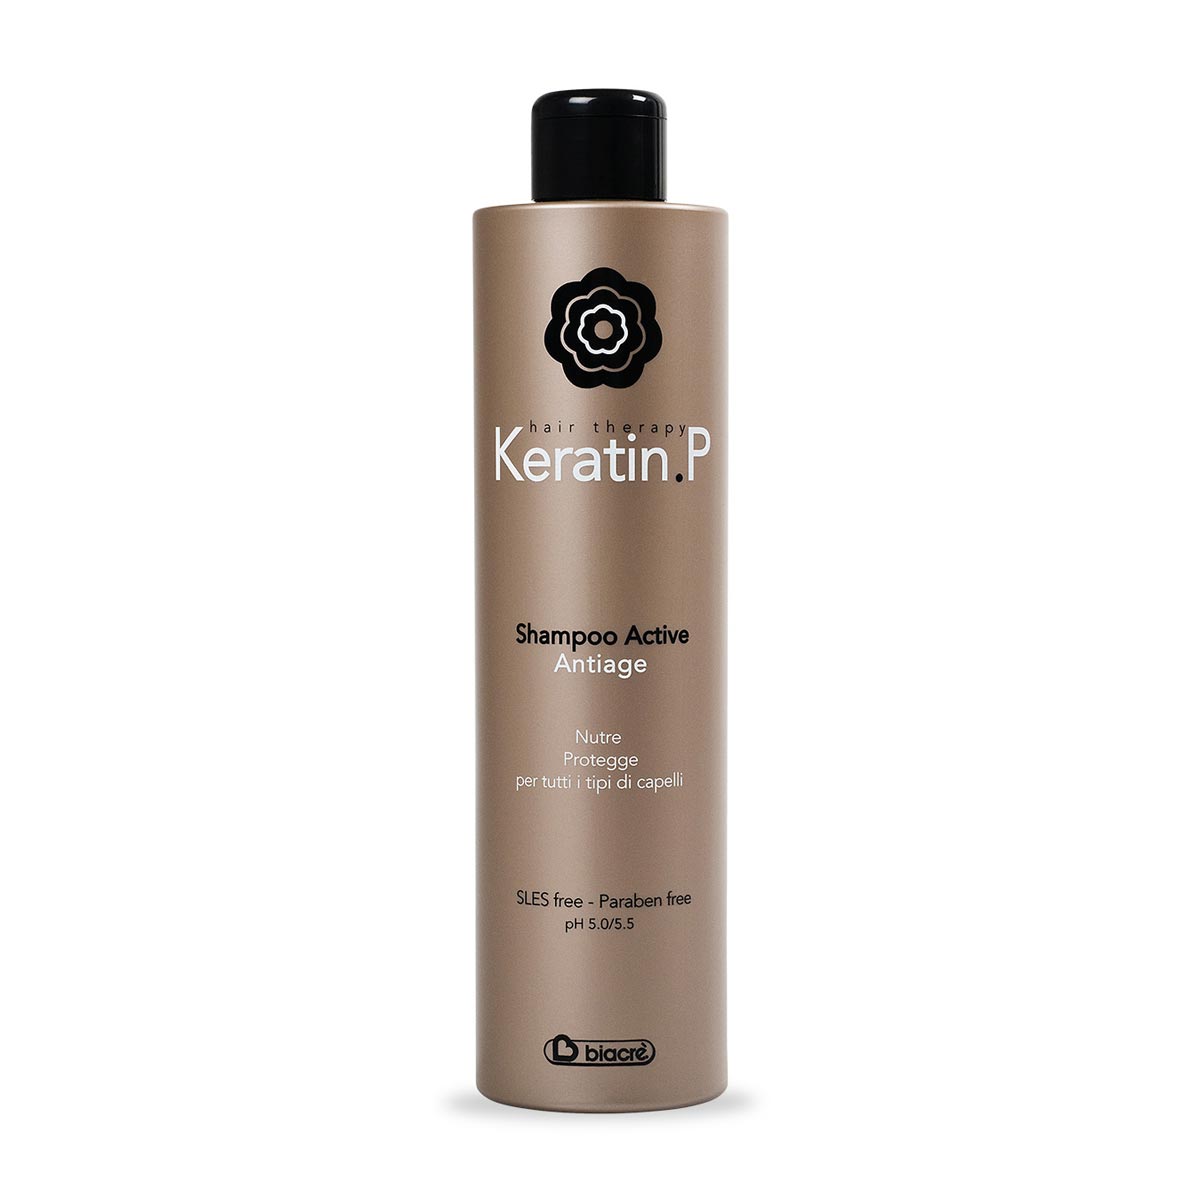 Shampoo Active Antiage Keratin.P Biacrè